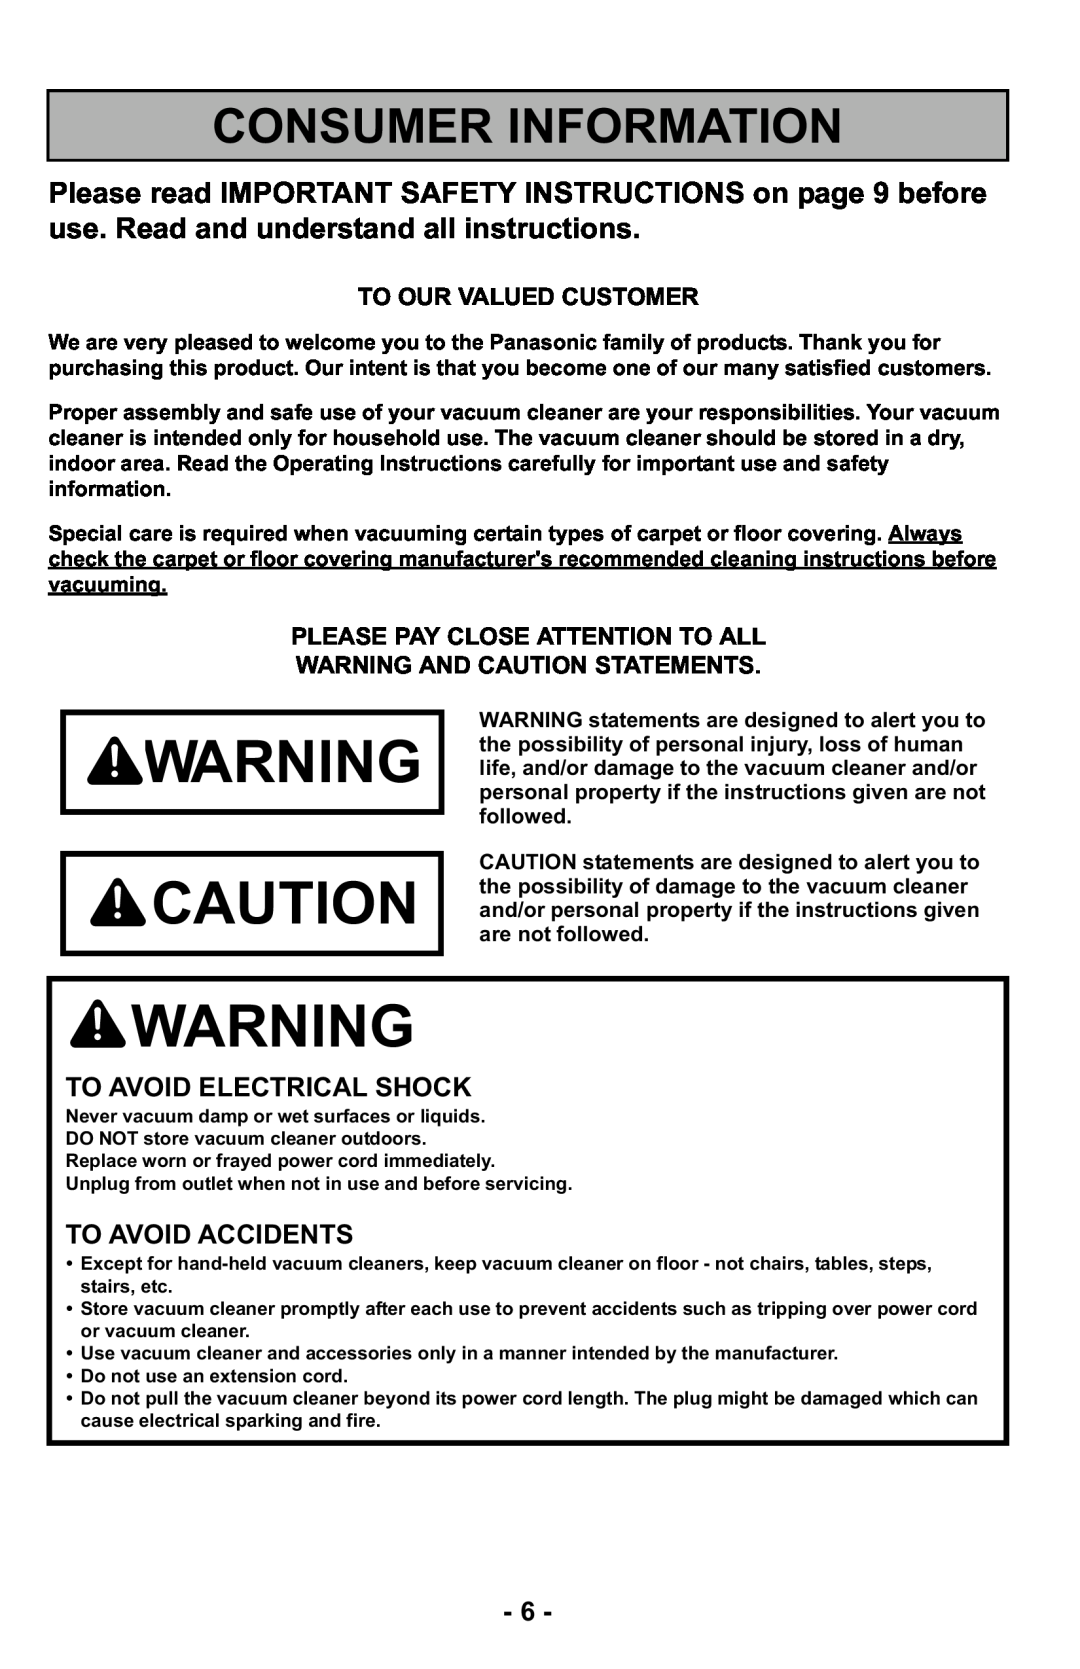 Panasonic MC-UL425 manuel dutilisation Consumer Information, To Avoid Electrical Shock, To Avoid Accidents 